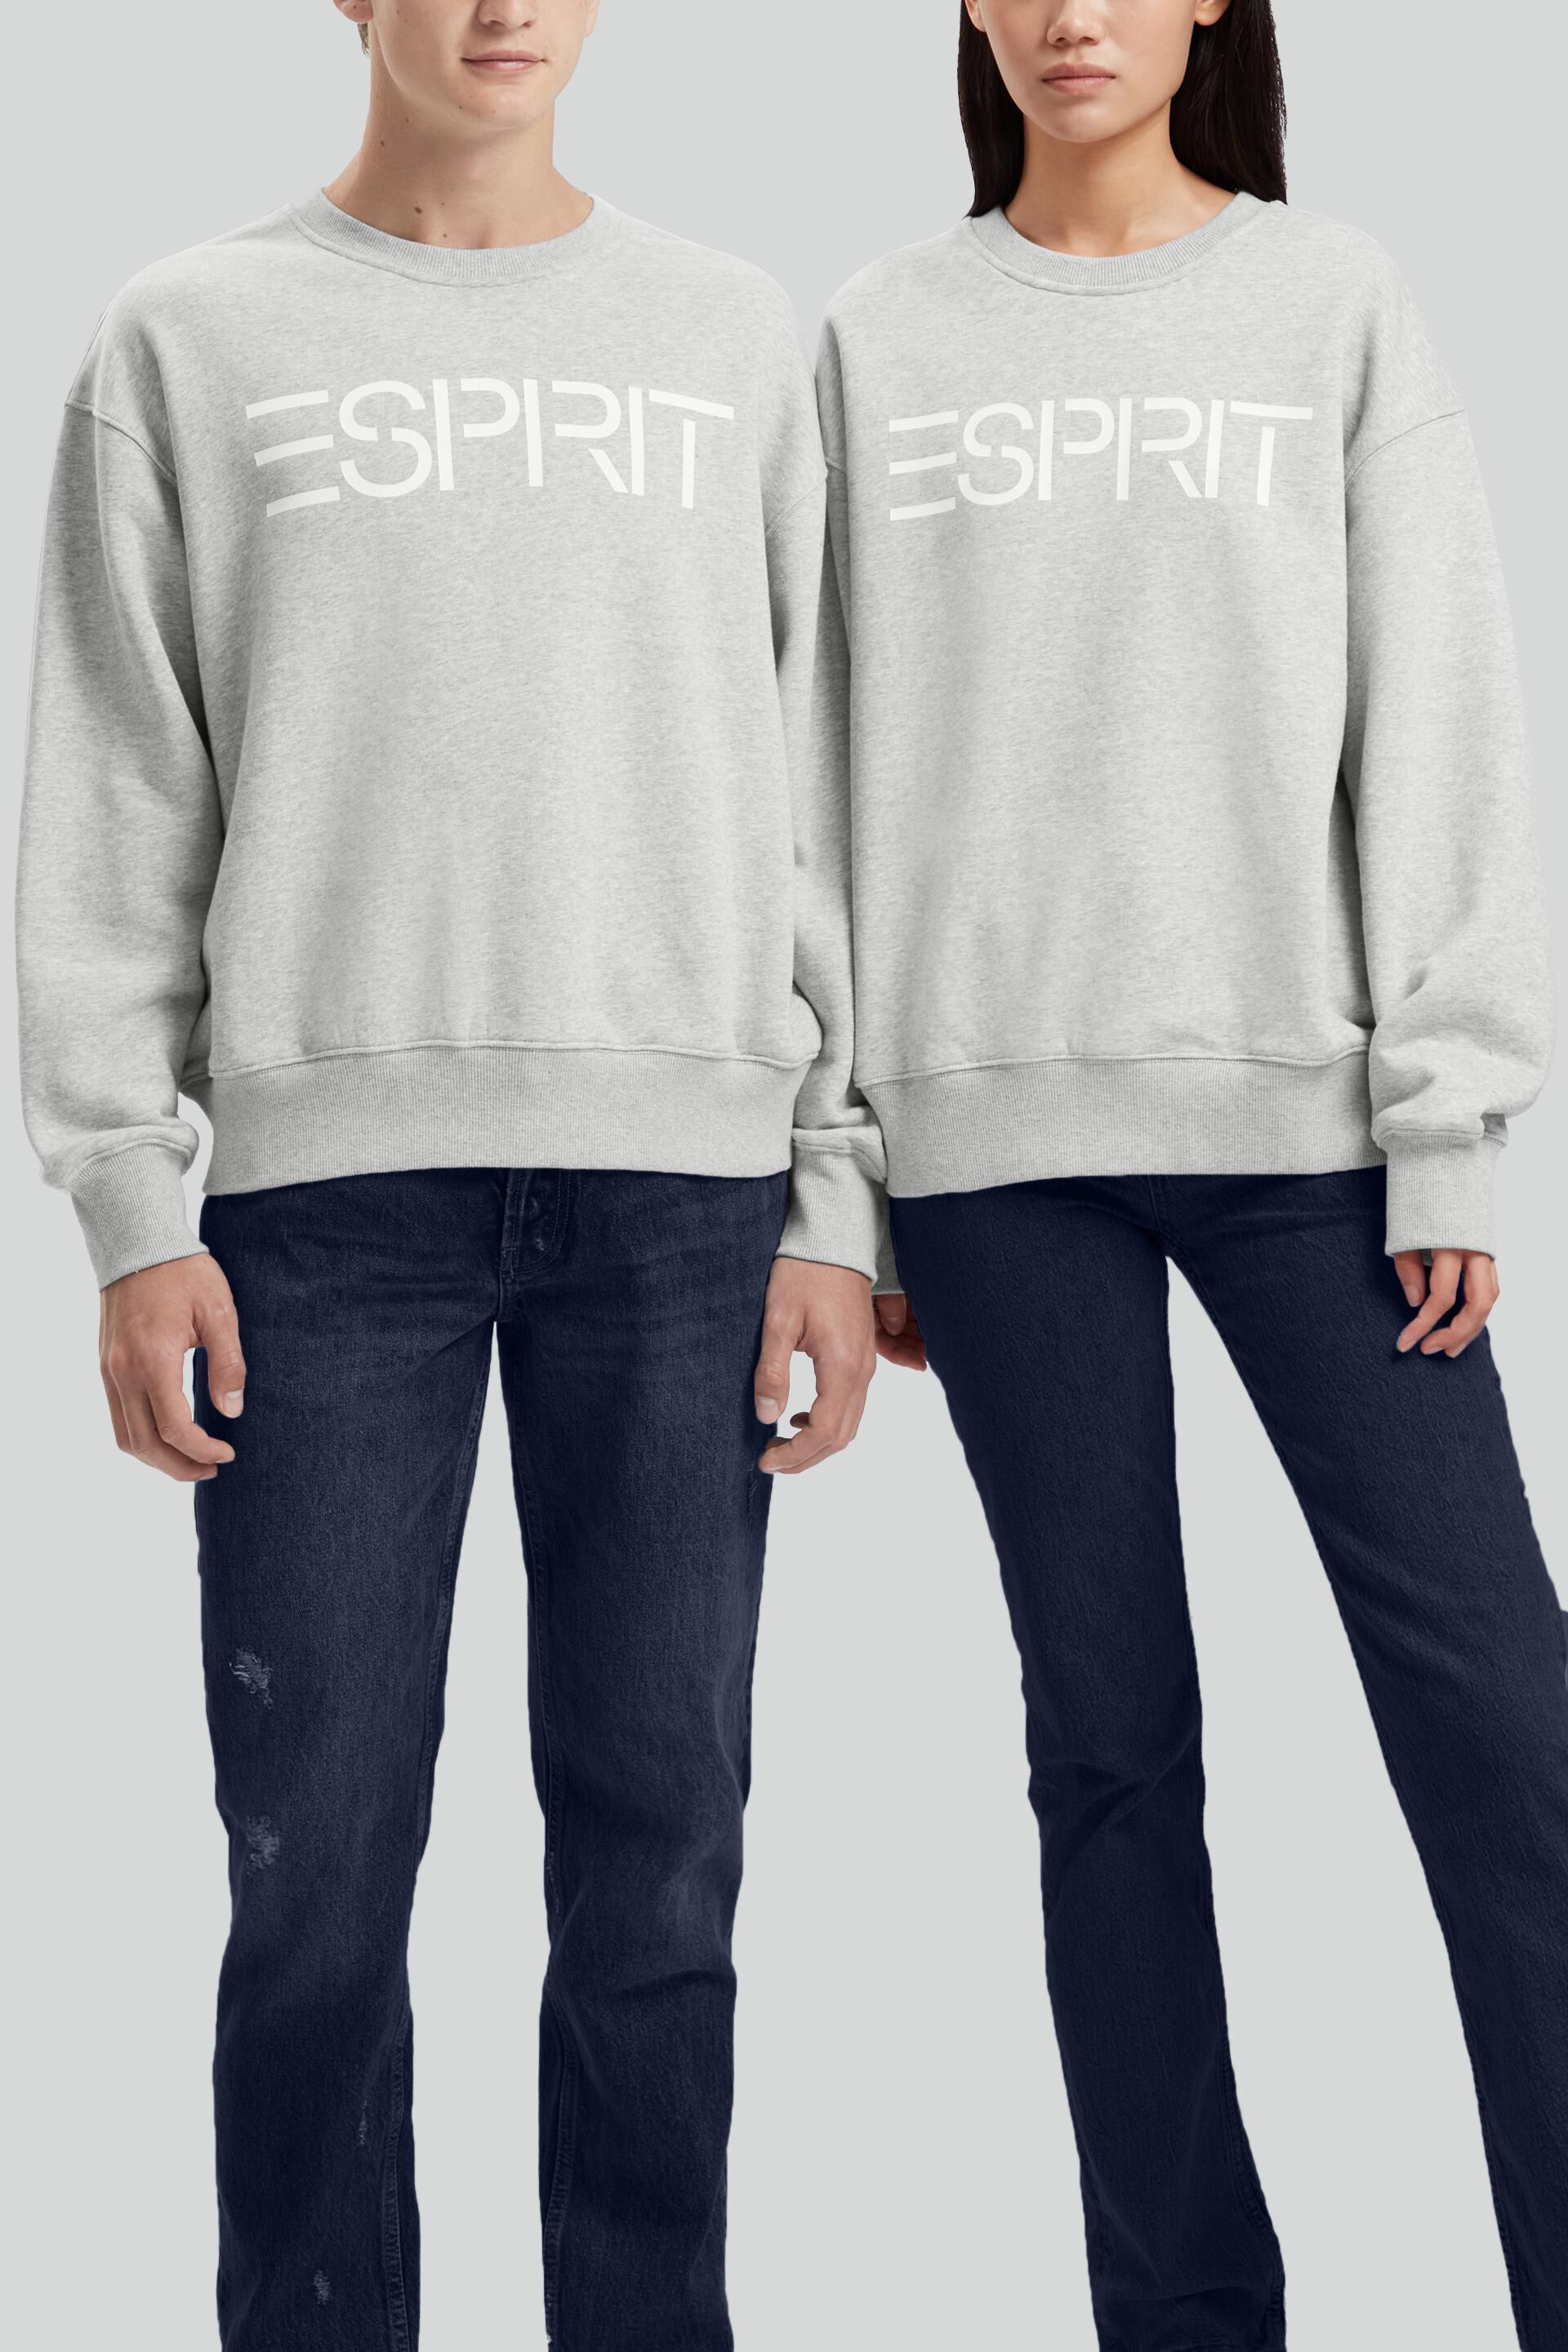 Esprit with print sweatshirt logo a Unisex